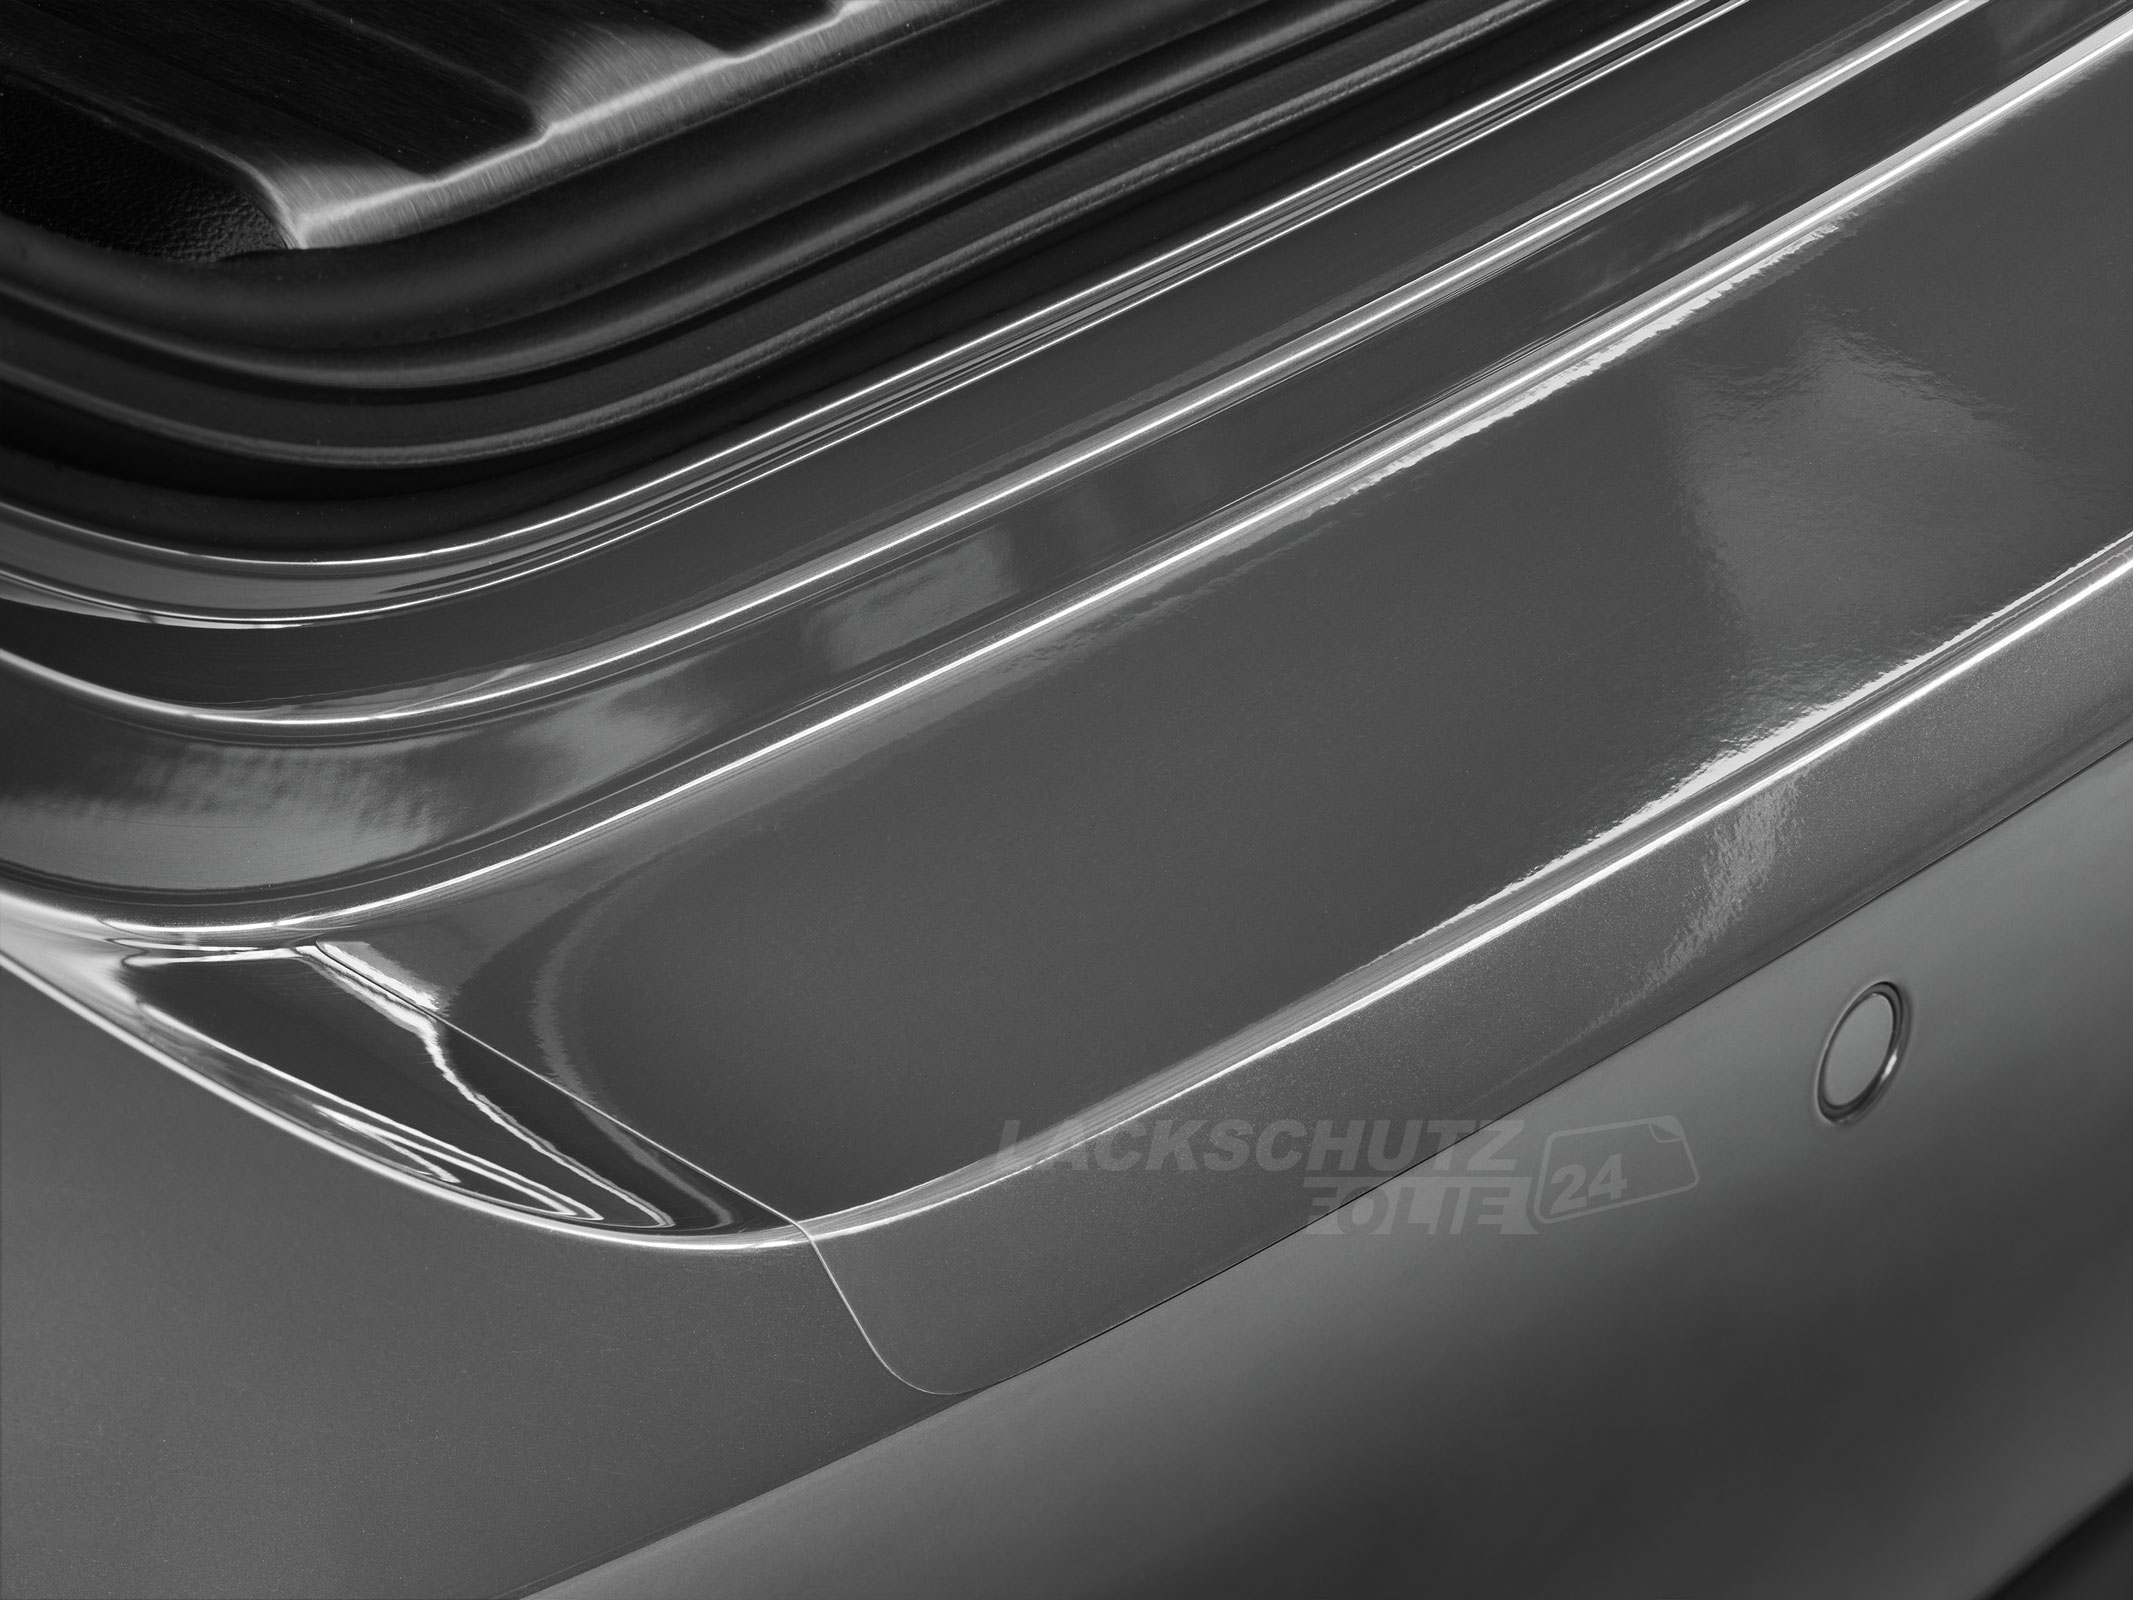 Ladekantenschutzfolie - Transparent Glatt Hochglänzend 240 µm stark für Opel Vectra Caravan (Kombi) Typ C, BJ 2004-2008